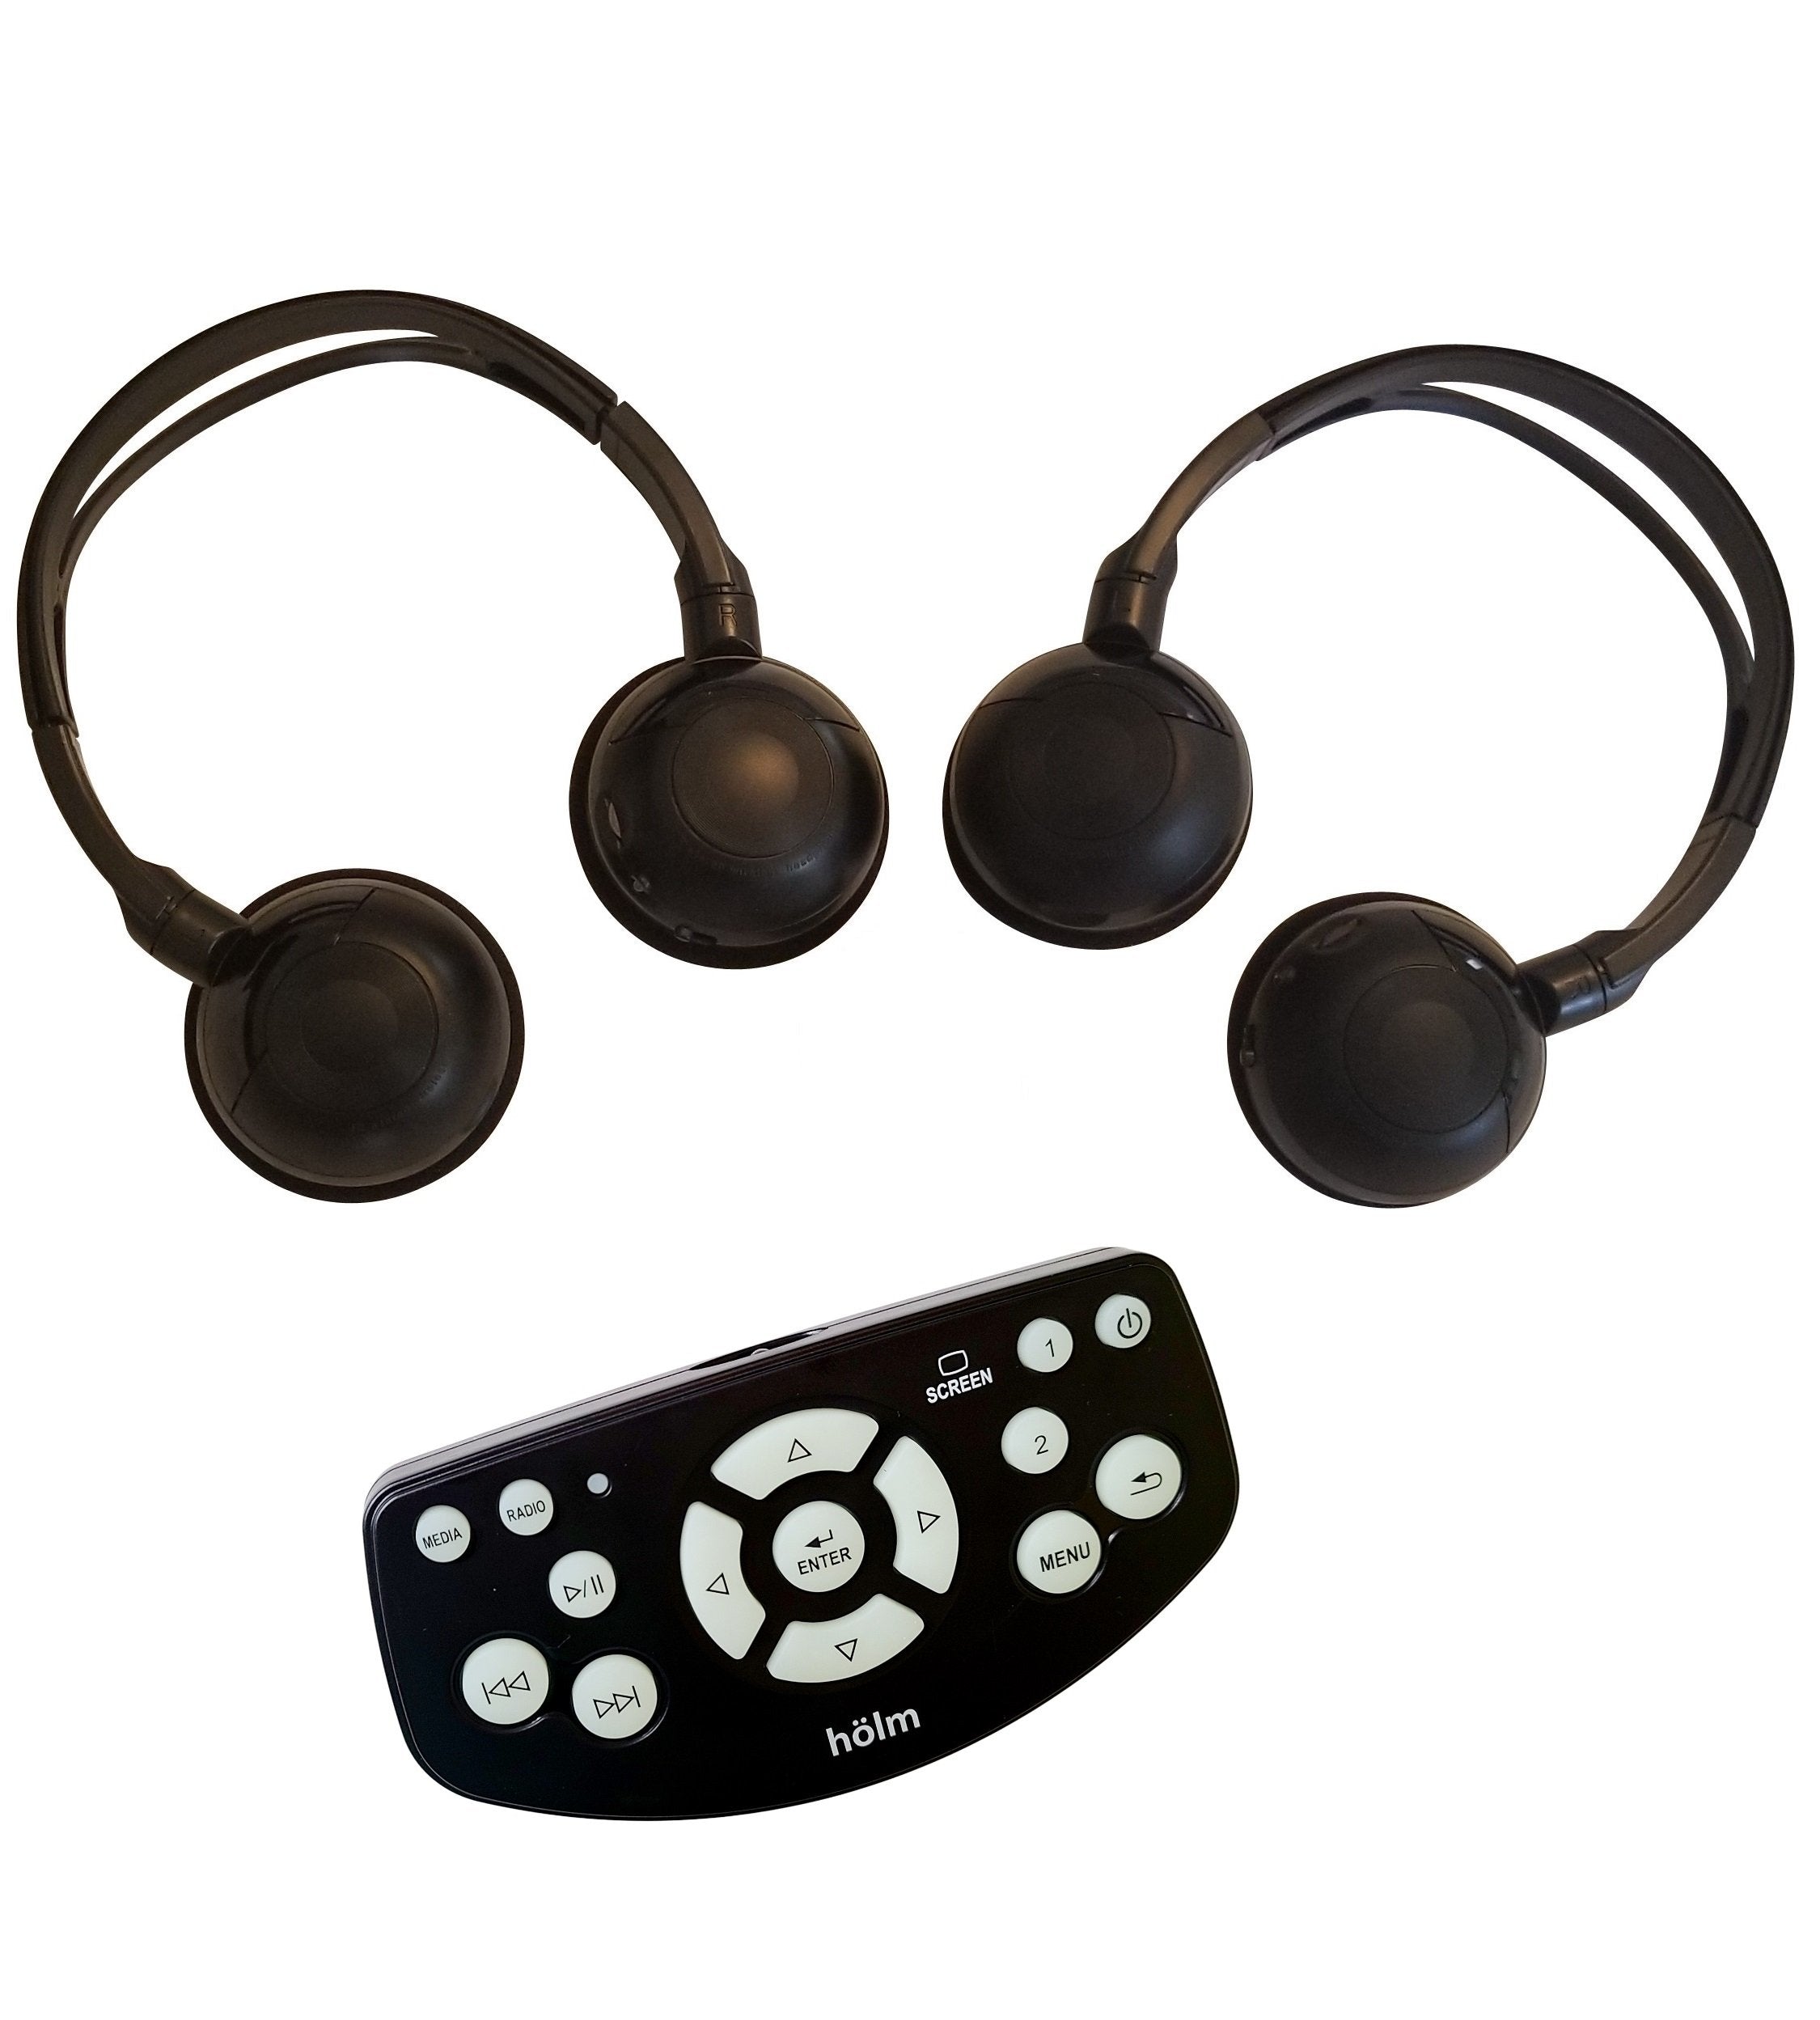 2015 GMC Yukon BluRay DVD Remote And Wireless Headphones